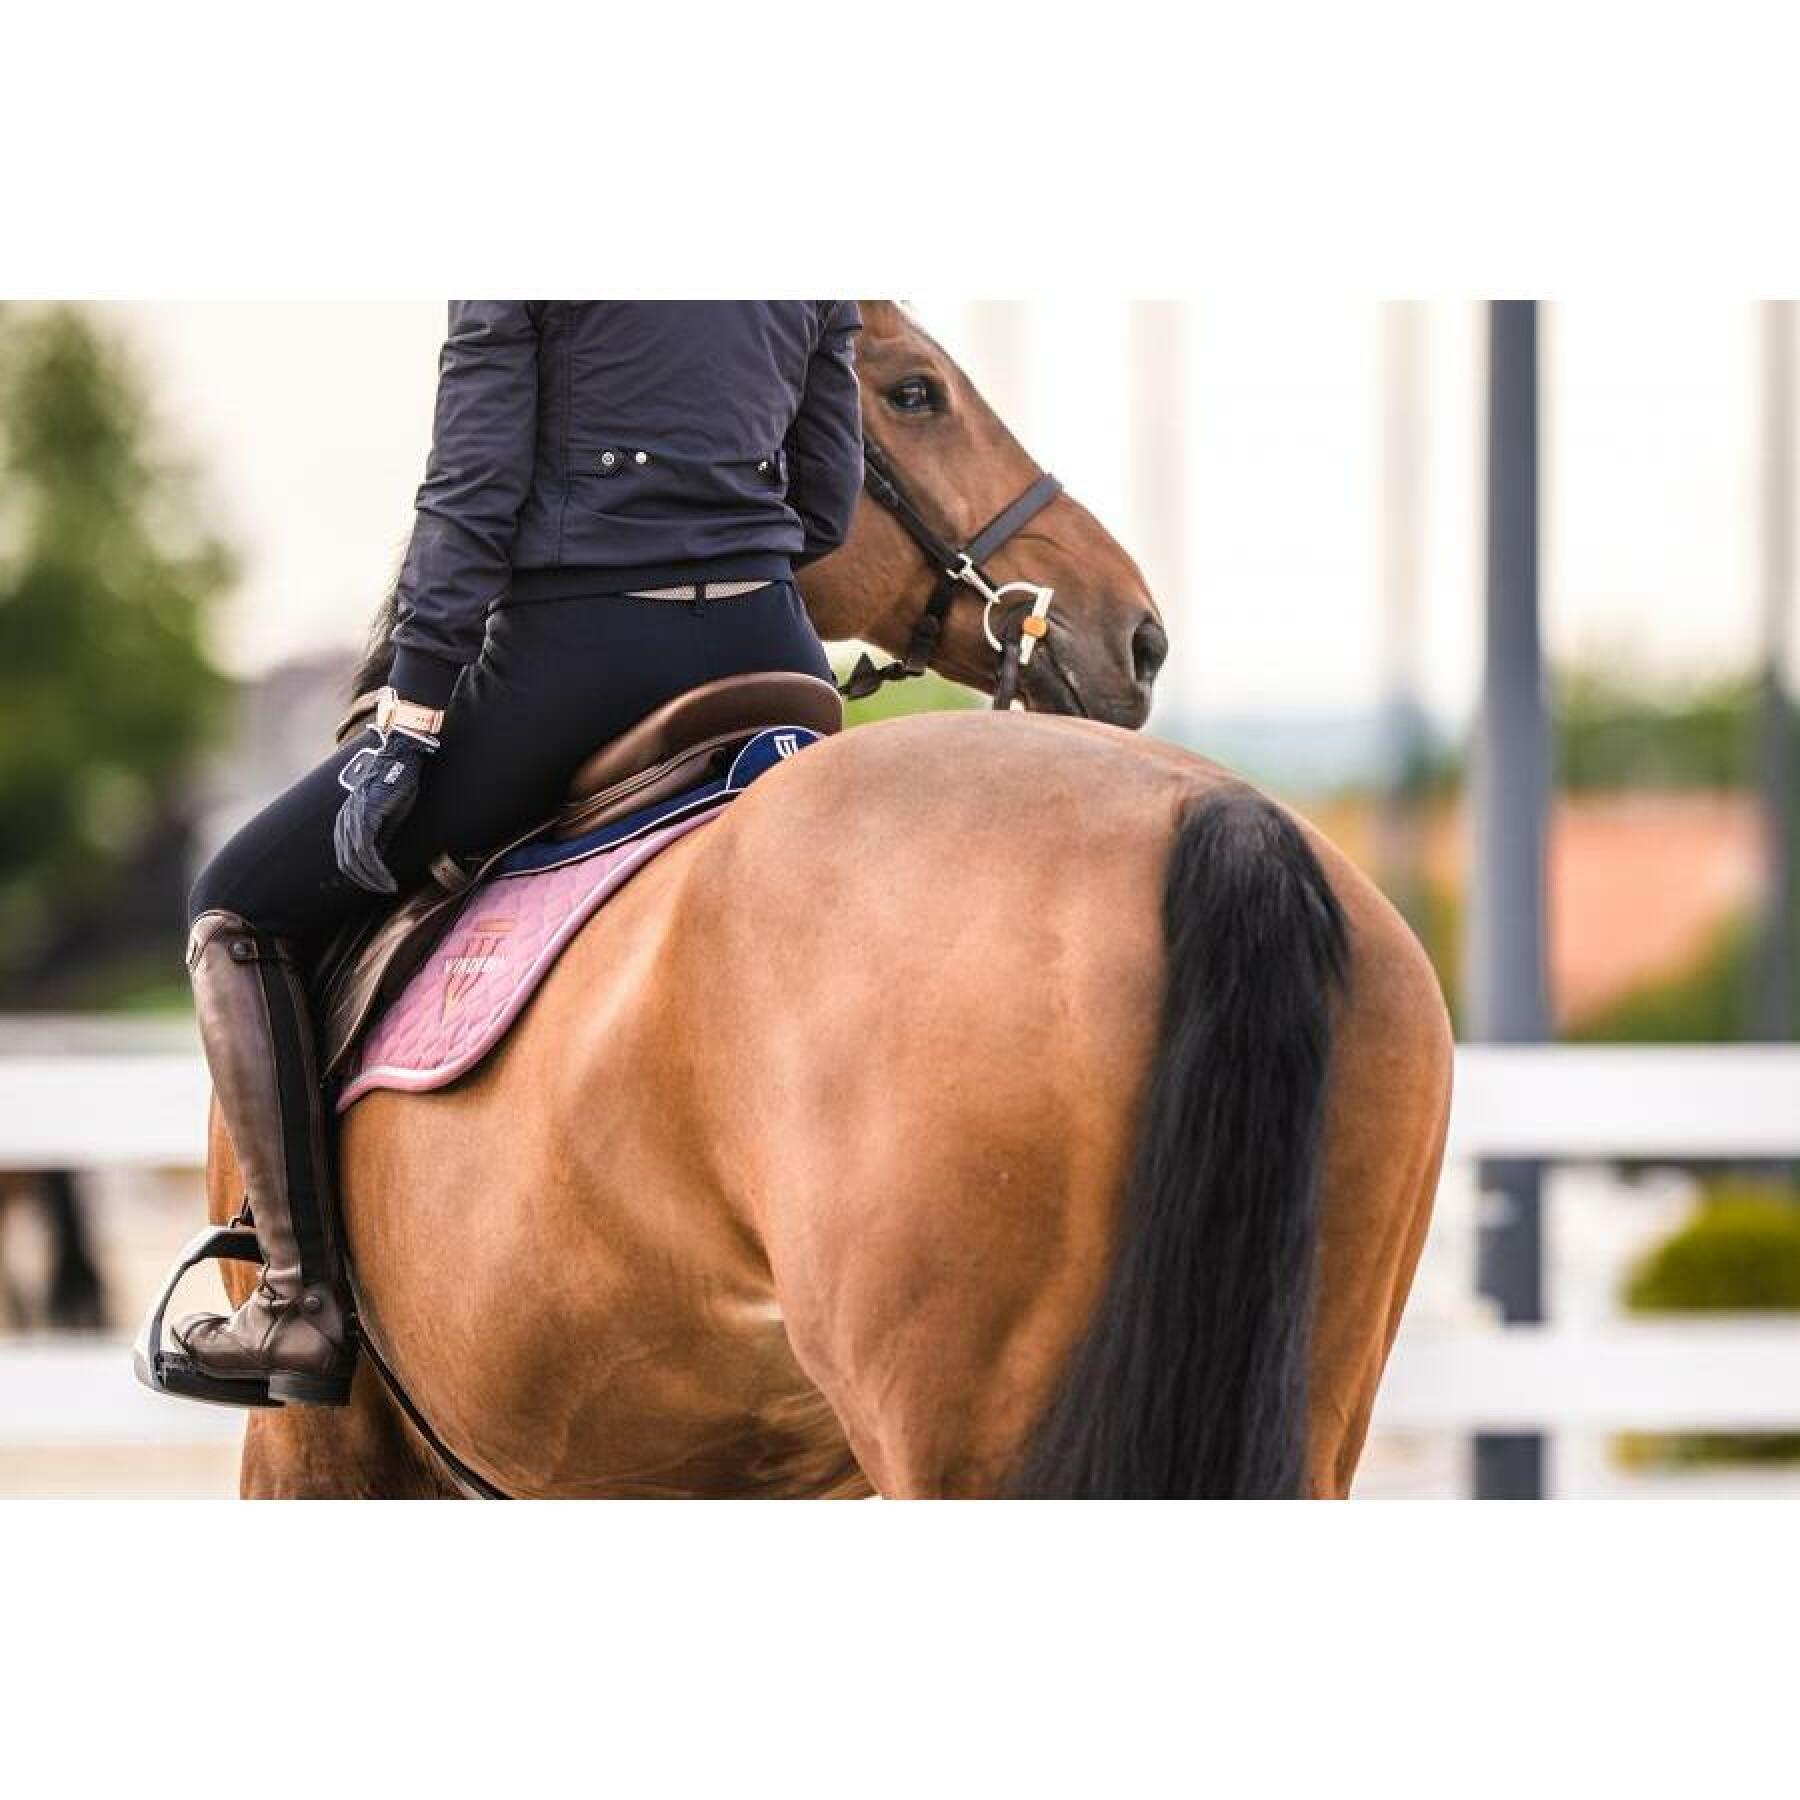 Manta de silla amortiguadora para caballos Winderen Jumping Comfort 18 mm